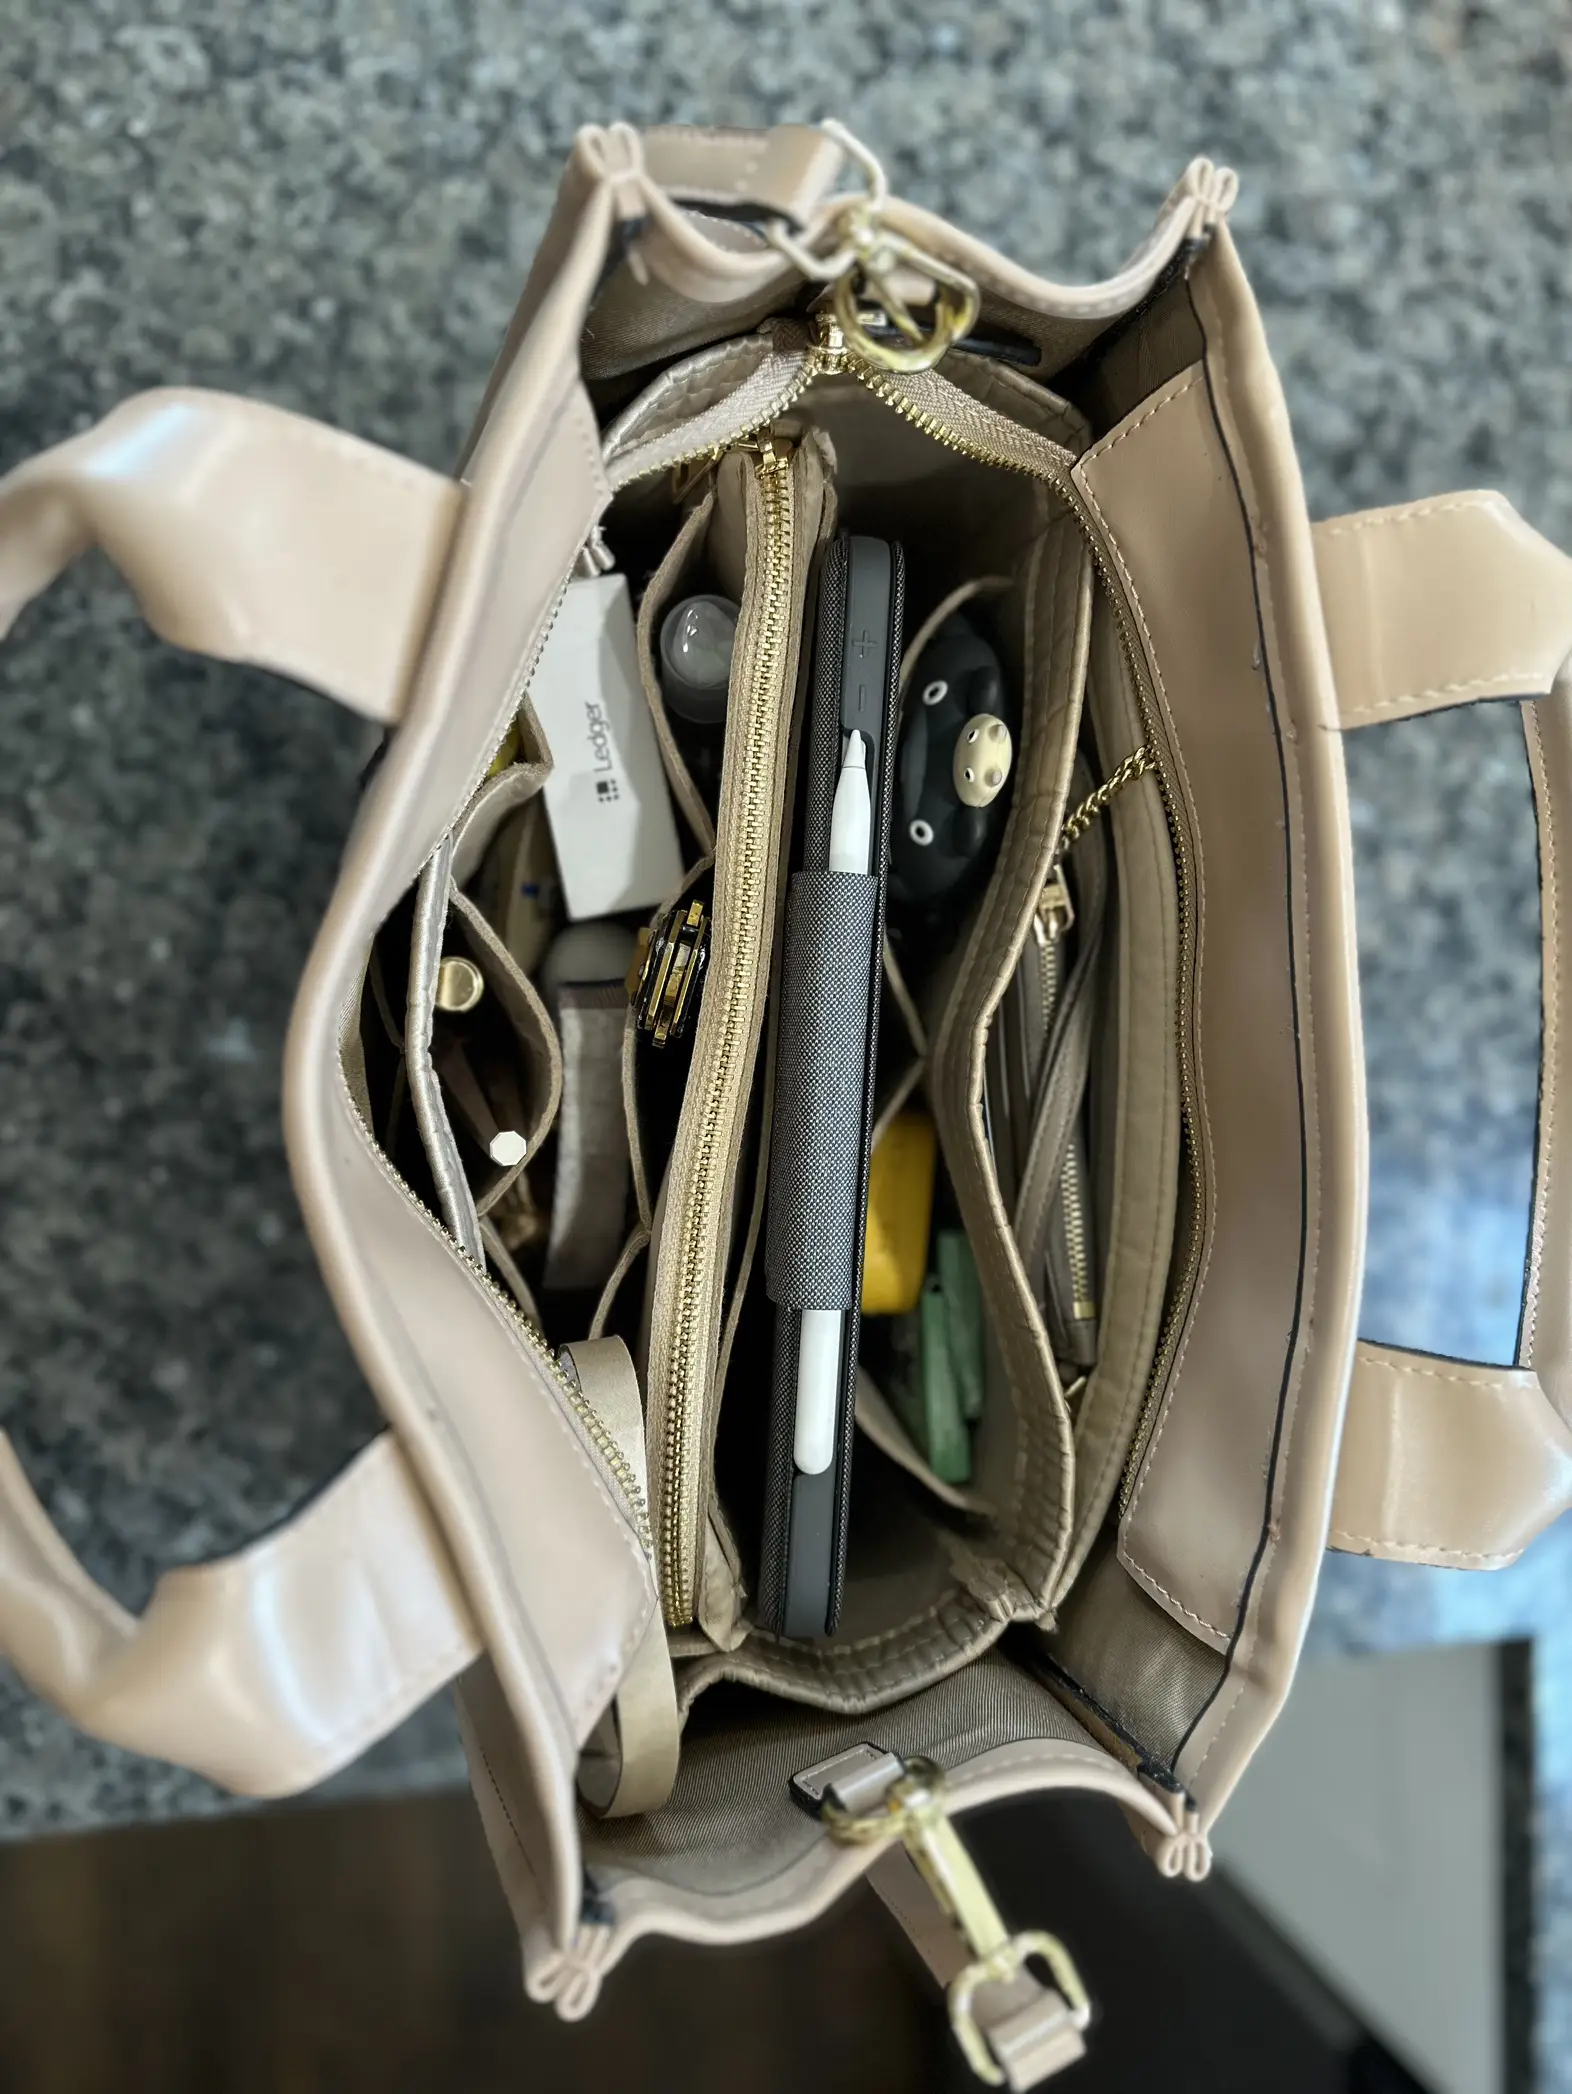 Monogram ID Tab Bag Charm and Key Holder S00 - Accessories